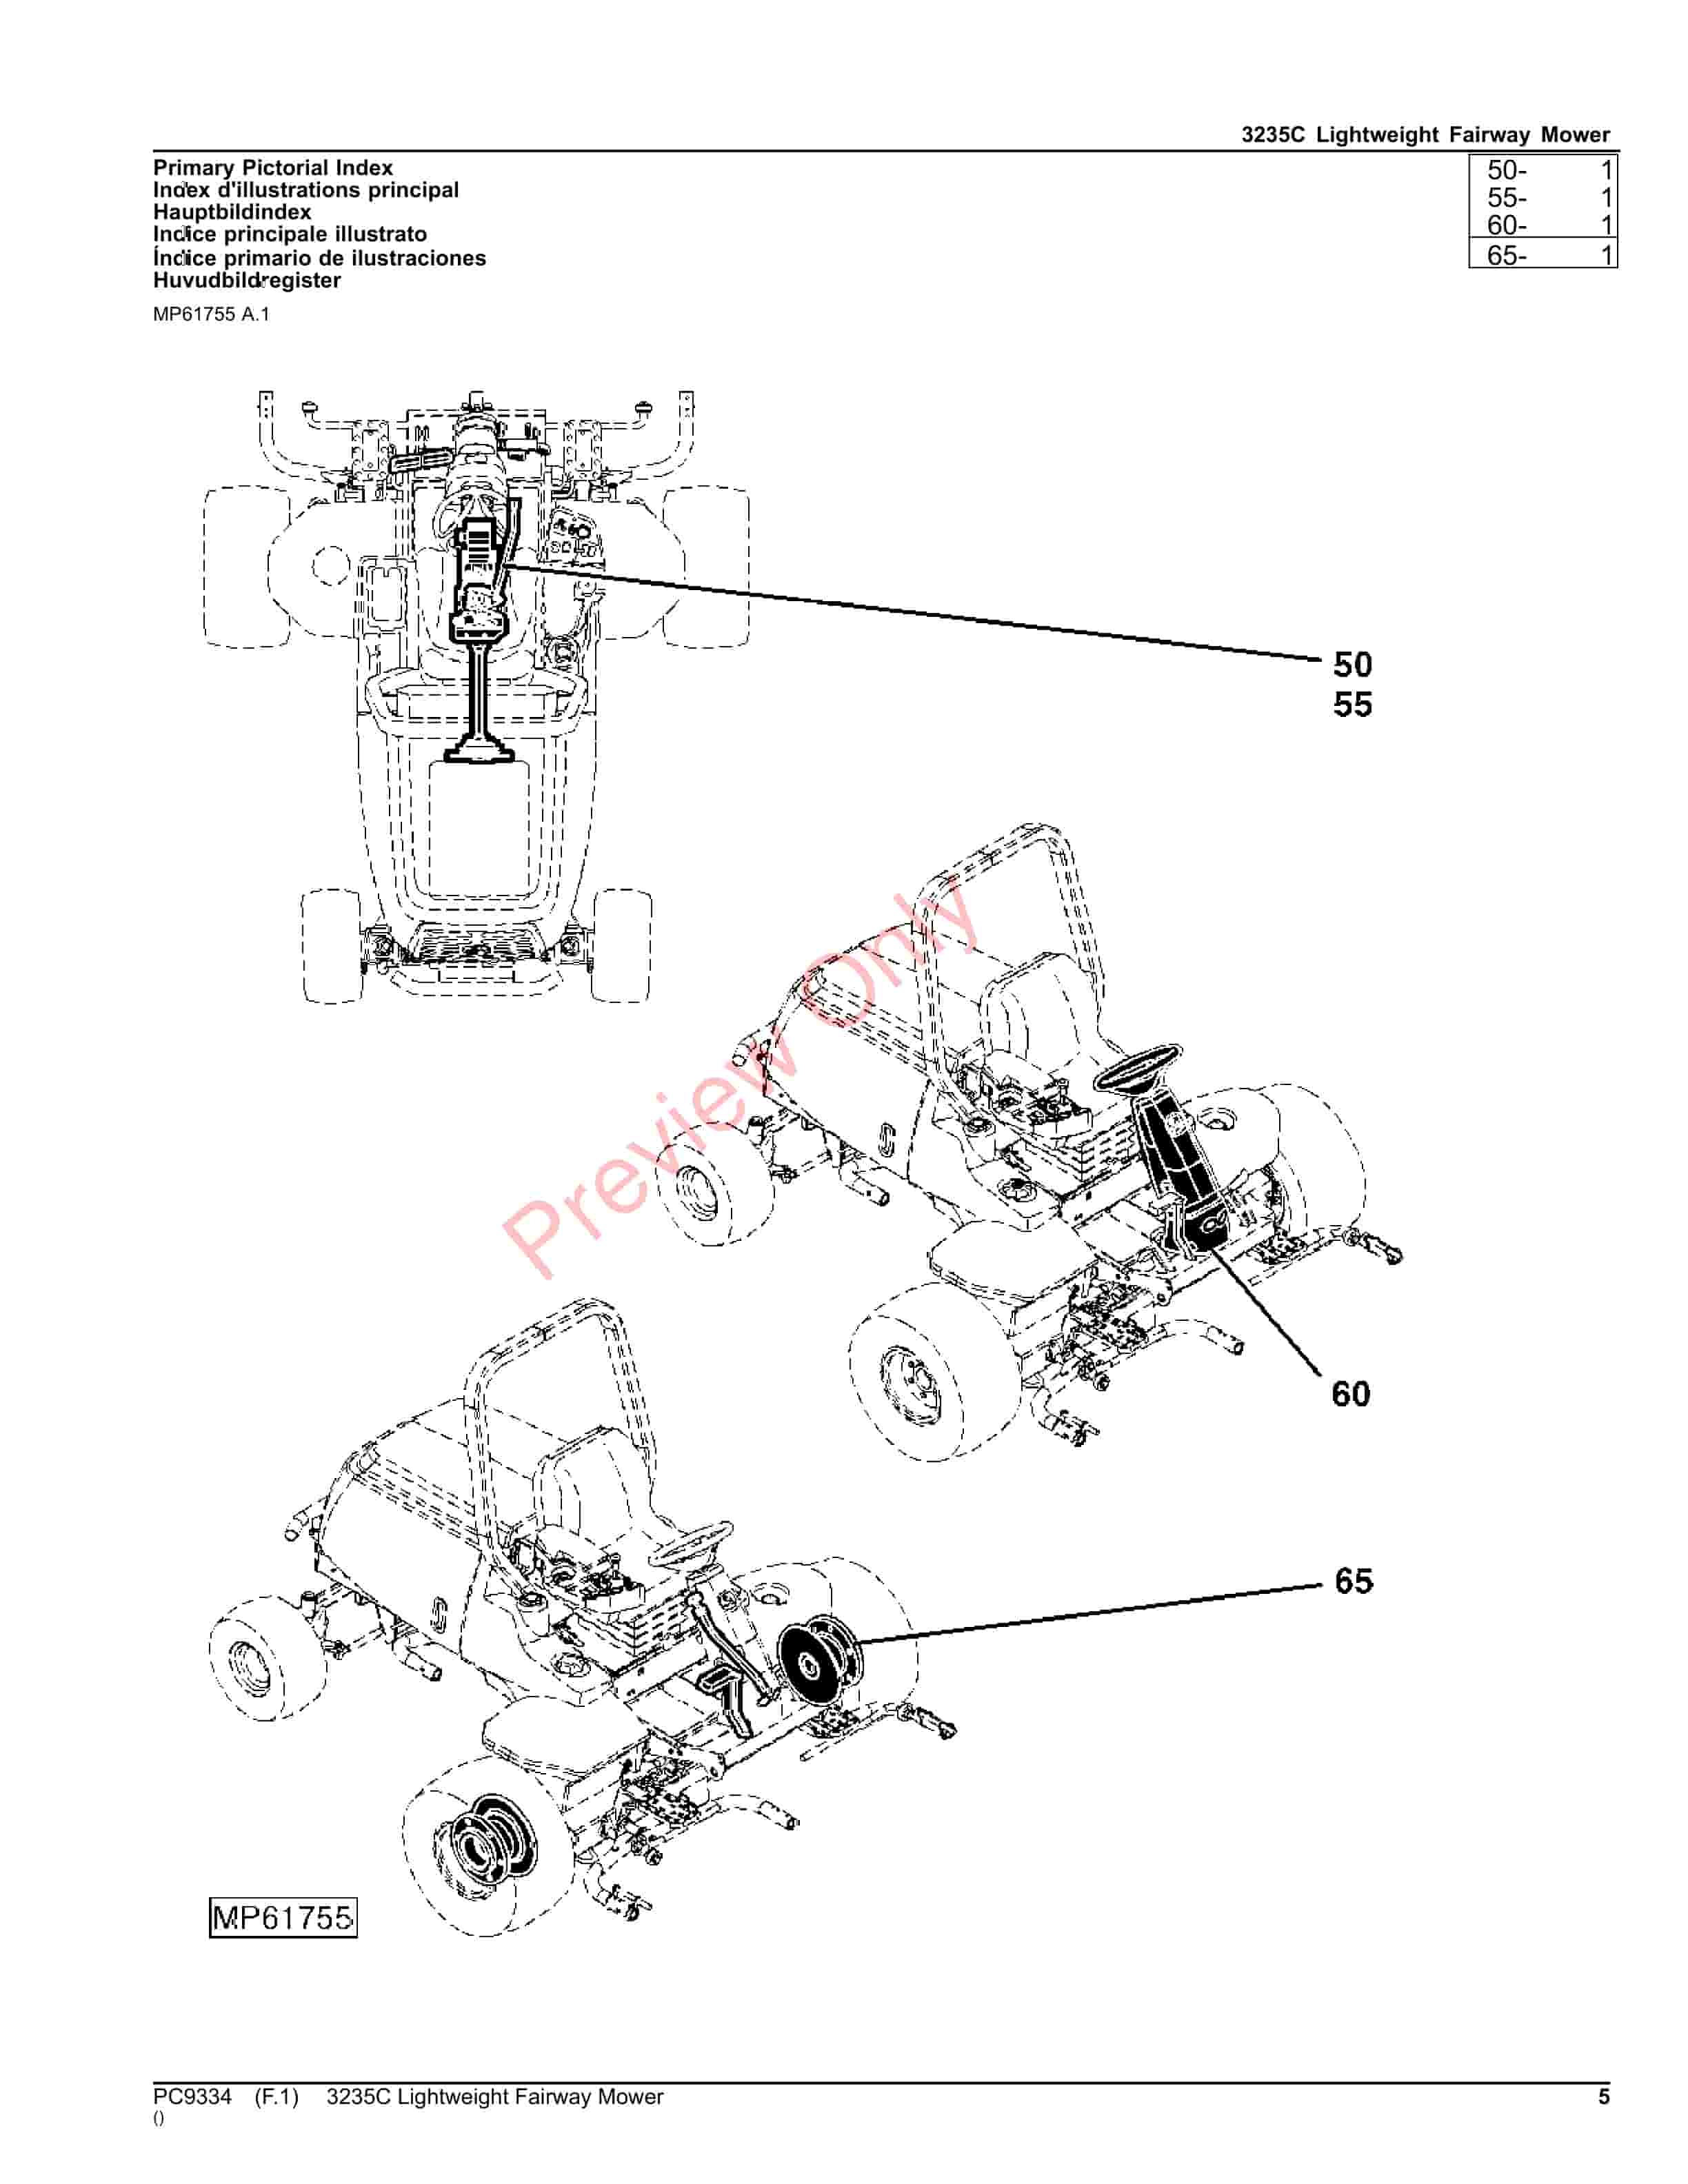 John Deere 3235C Lightweight Fairway Mower Parts Catalog PC9334 16JUL23-5